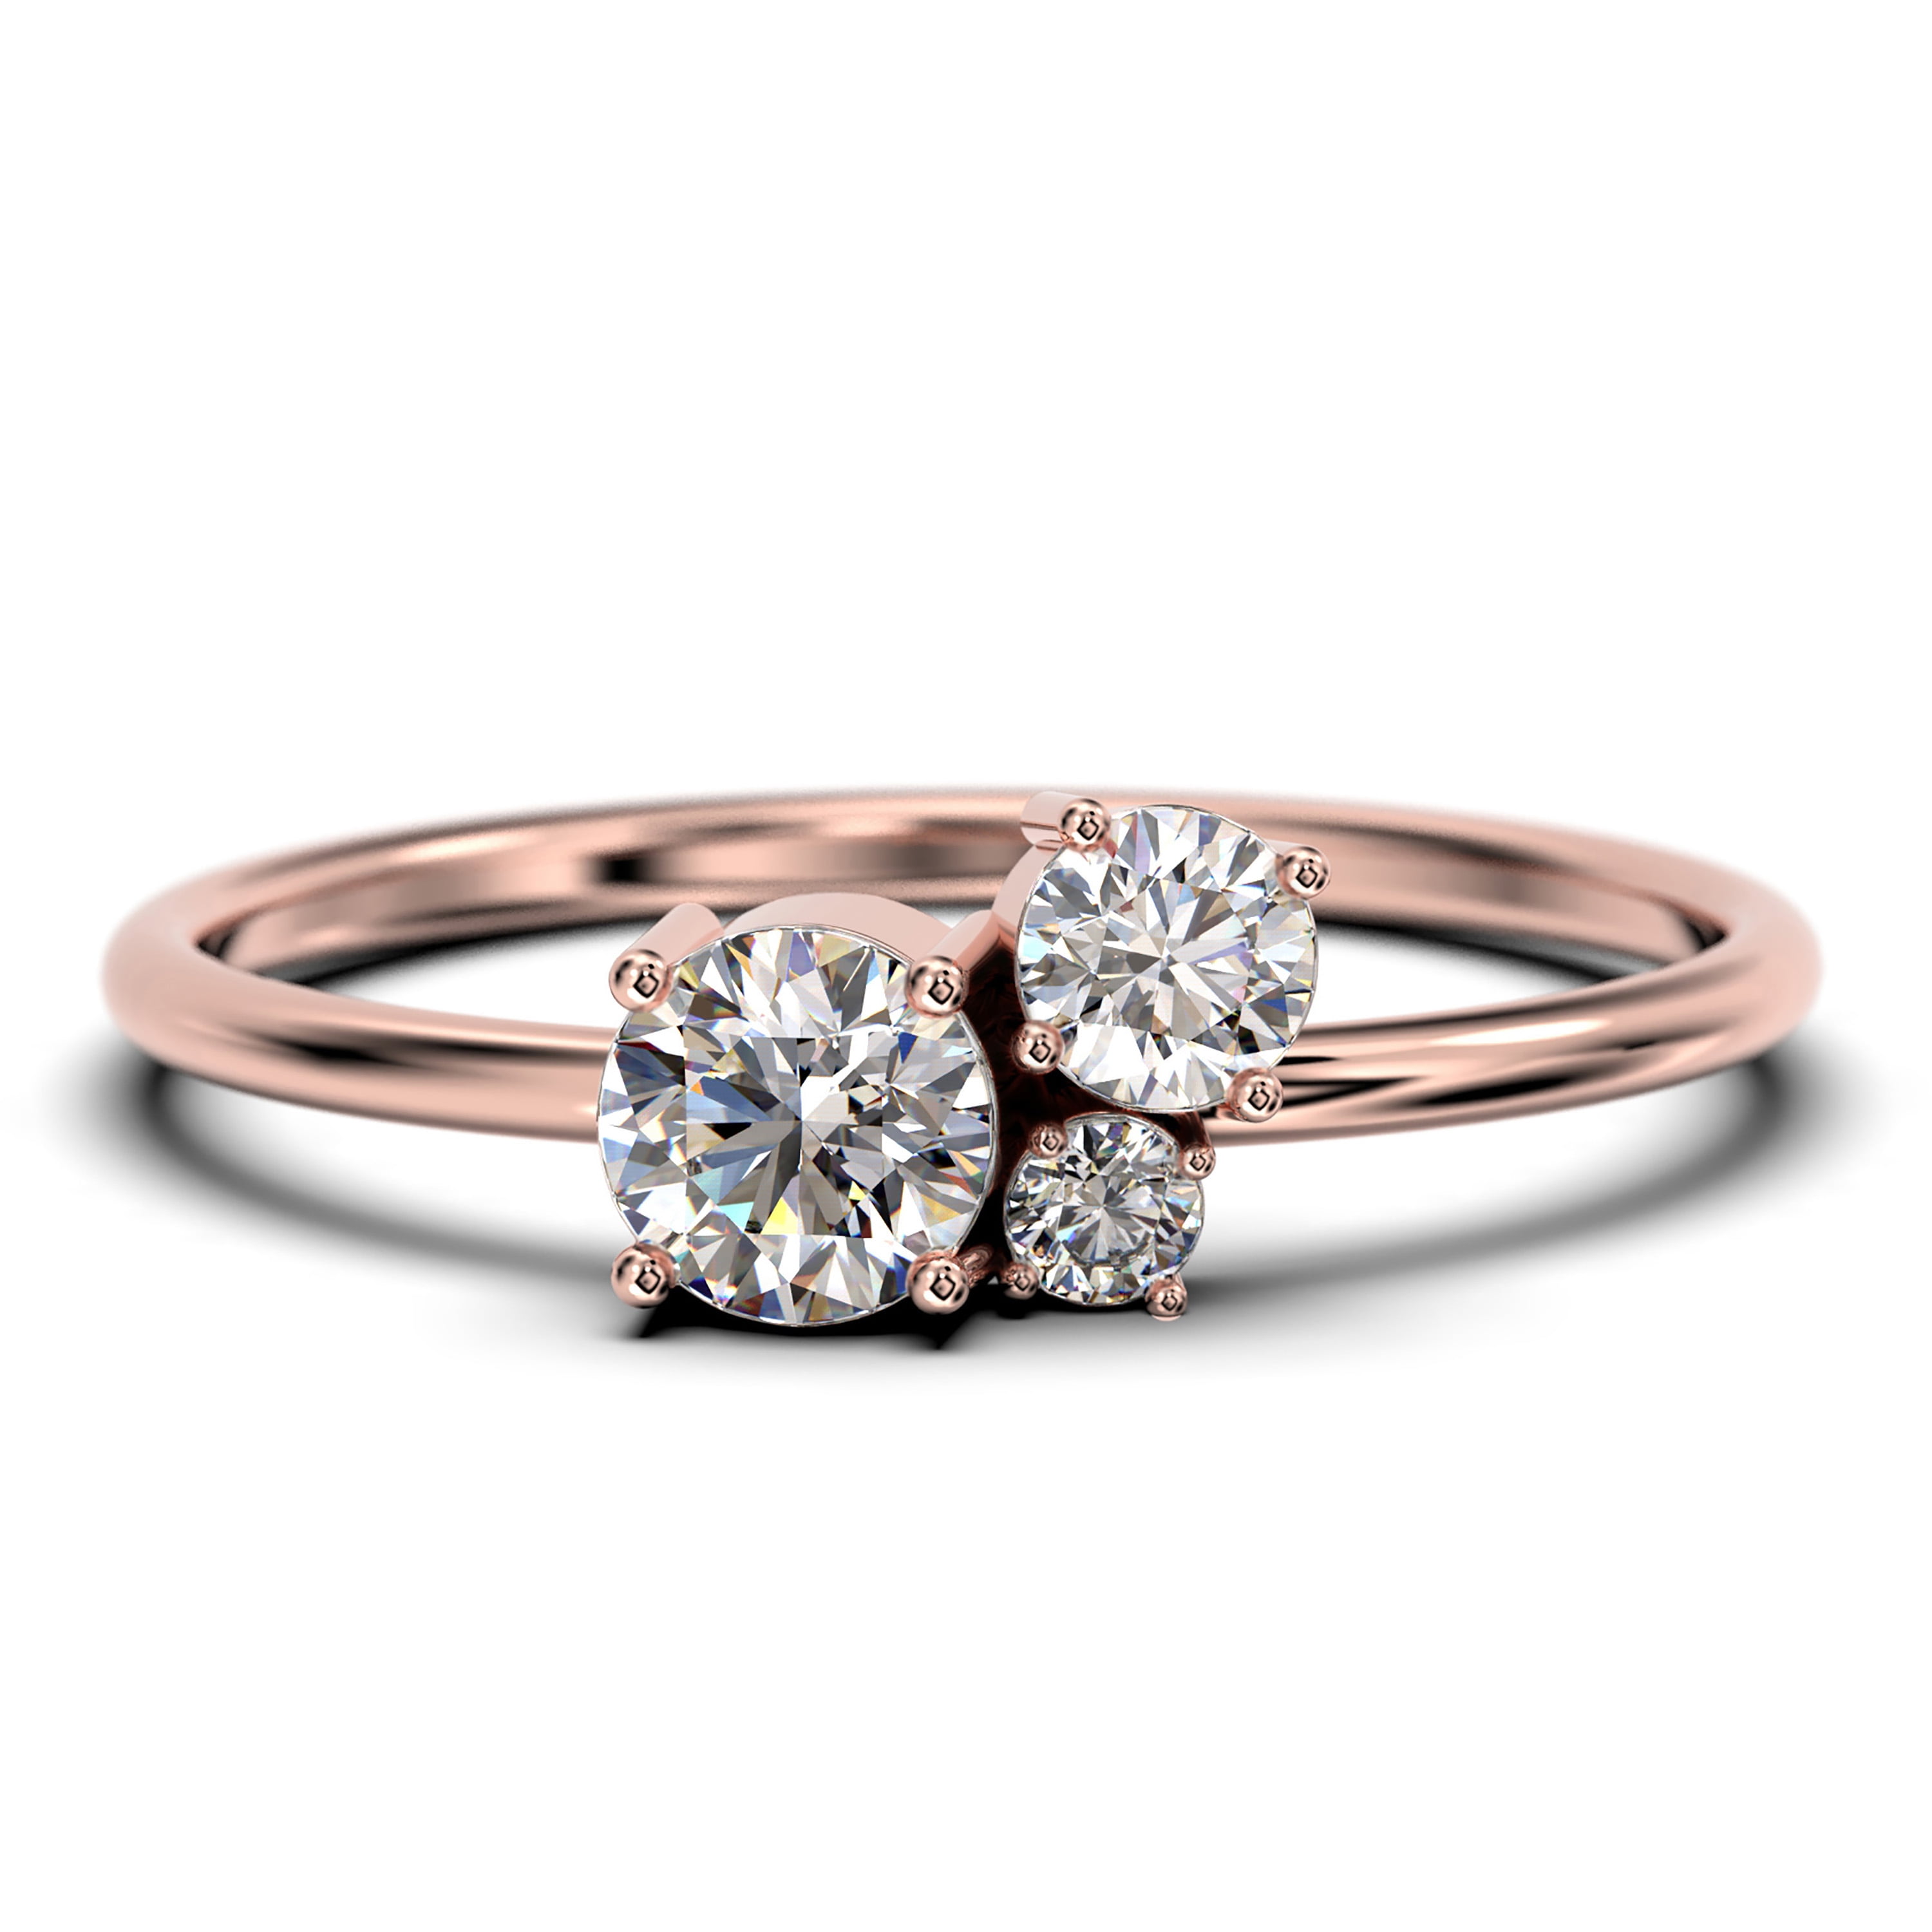 14k white gold white sapphire diamond unusual unique floral engagement ring  anniversary ring wedding band set R278S-WGDWS | Caravaggio Jewelry